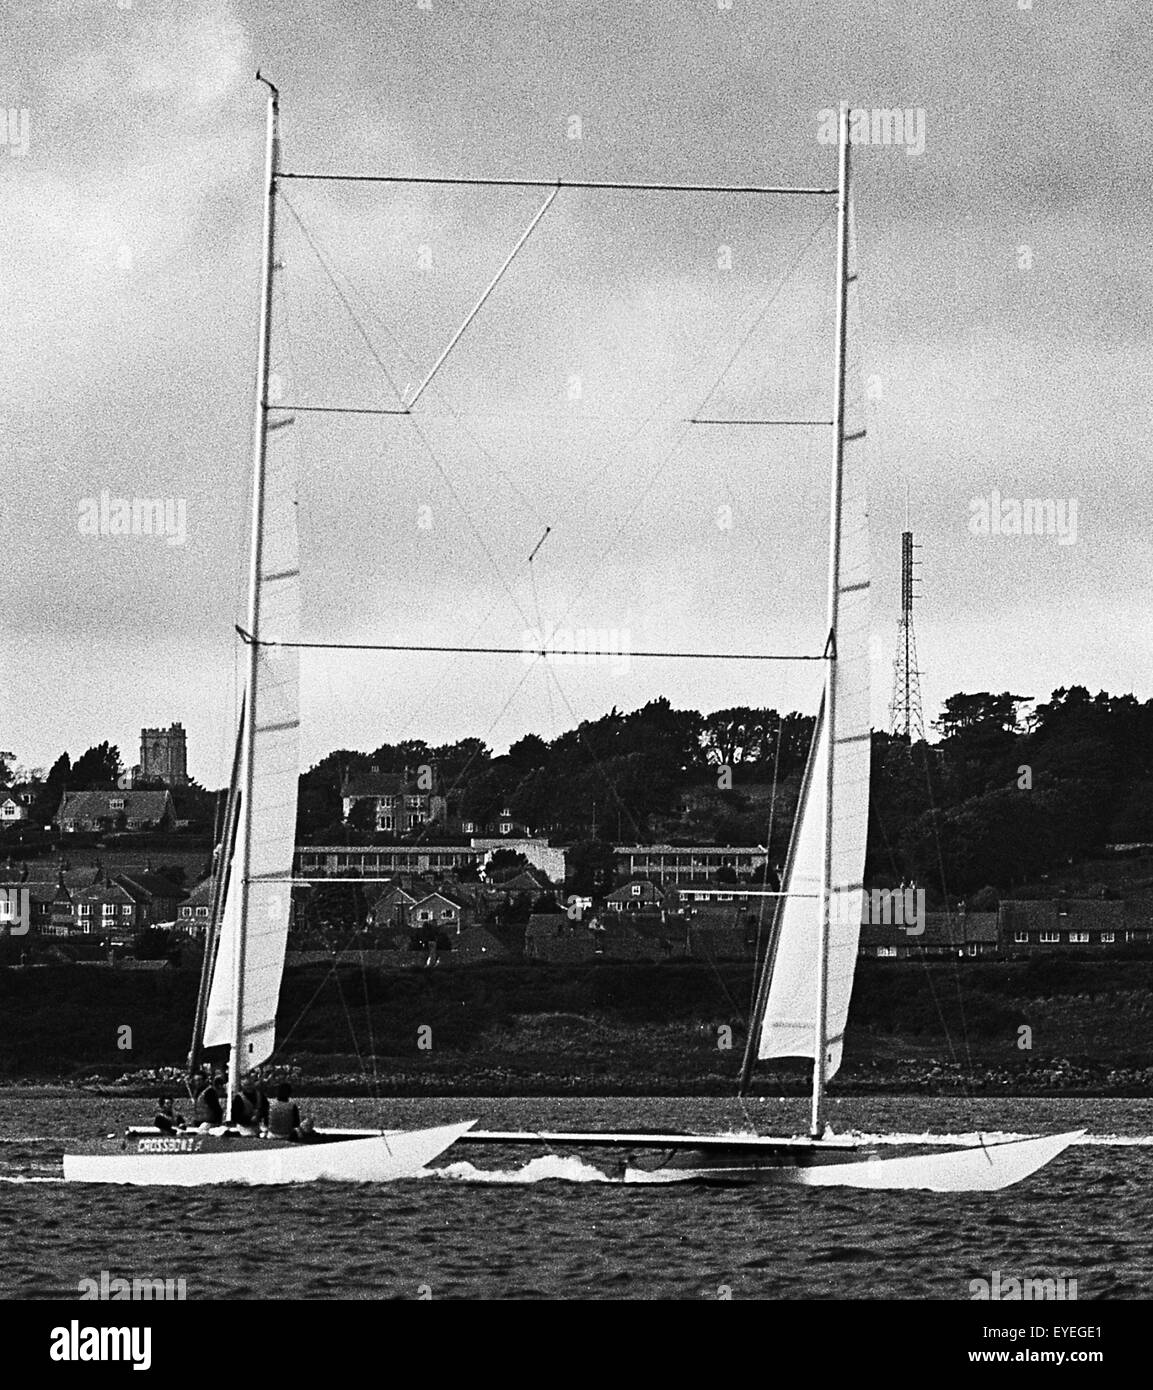 AJAXNETPHOTO. - 29 Oct, 1976. PORTLAND, Inglaterra. - Velocidad de Weymouth semana - Catamarán CROSSBOW II EN VELOCIDAD EN PORTLAND Harbour. Foto:Jonathan EASTLAND/AJAX REF:7629101 30175 Foto de stock